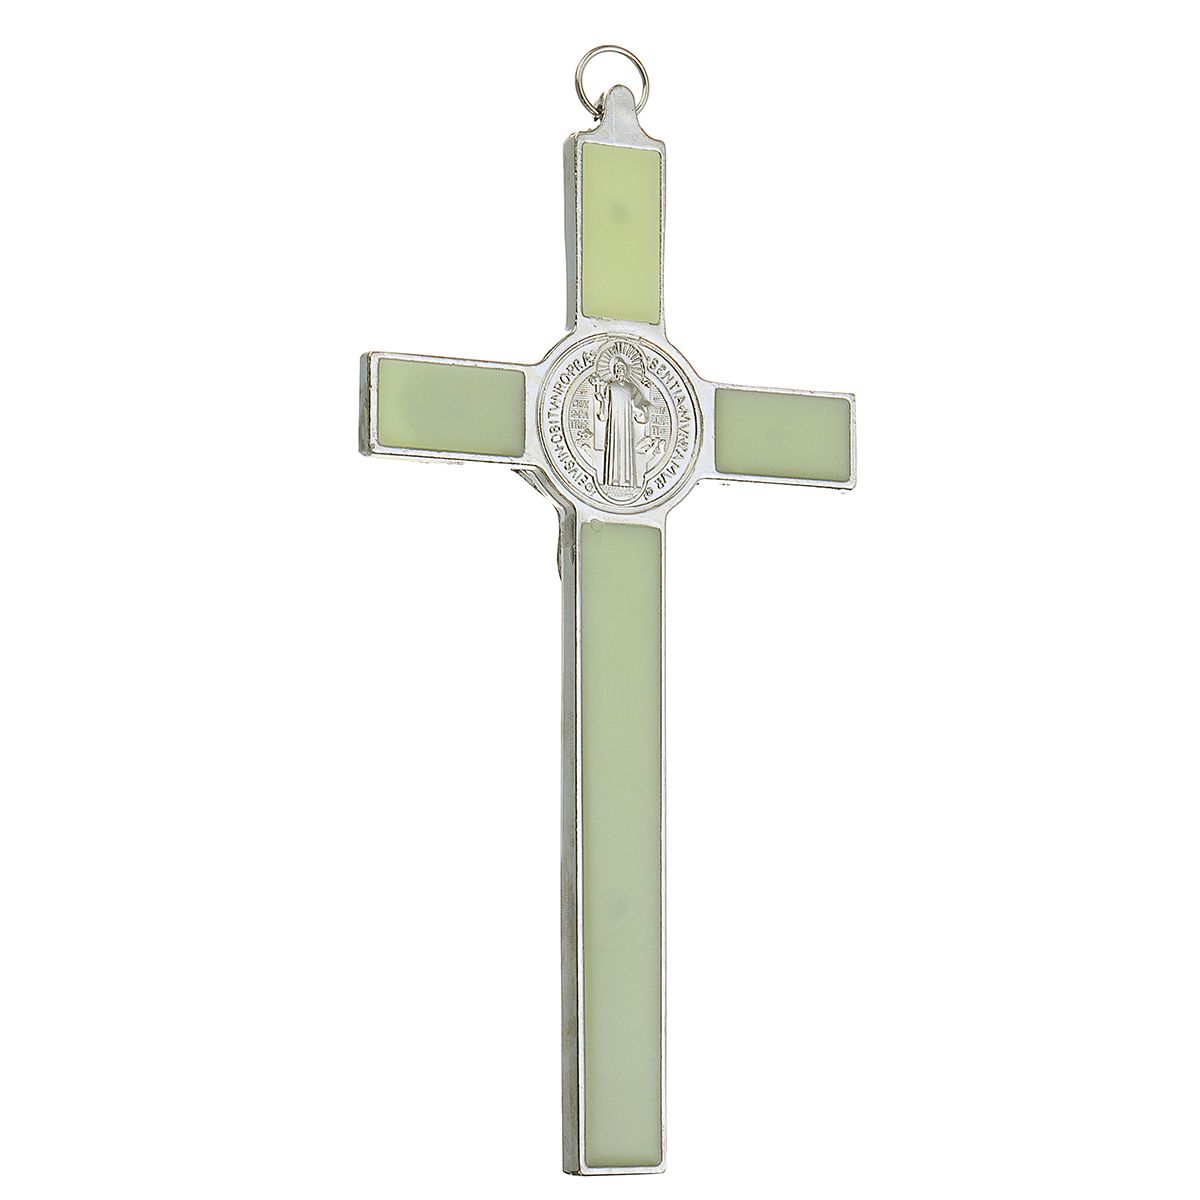 7-Antique-Green-Catholic-Religious-Wall-Cross-Jesus-Crucifix-Decorations-Noctilucent-1499289